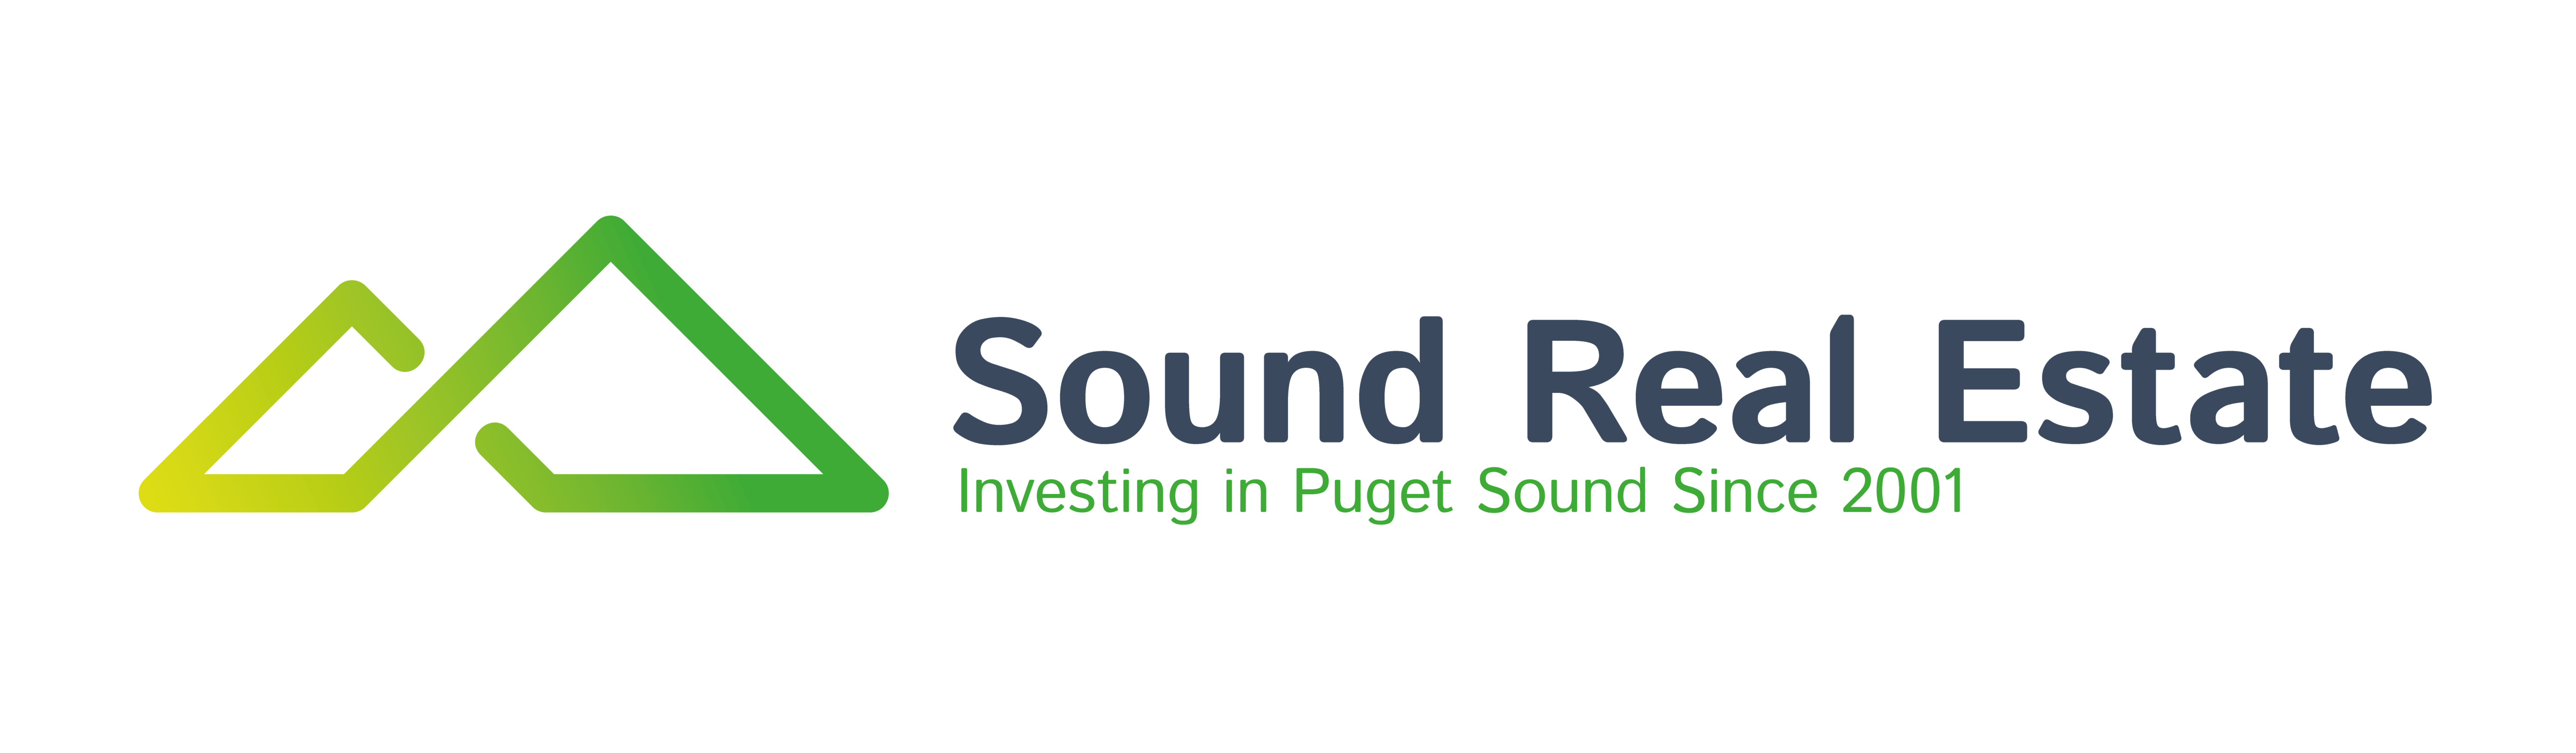 Sound Real Estate logo